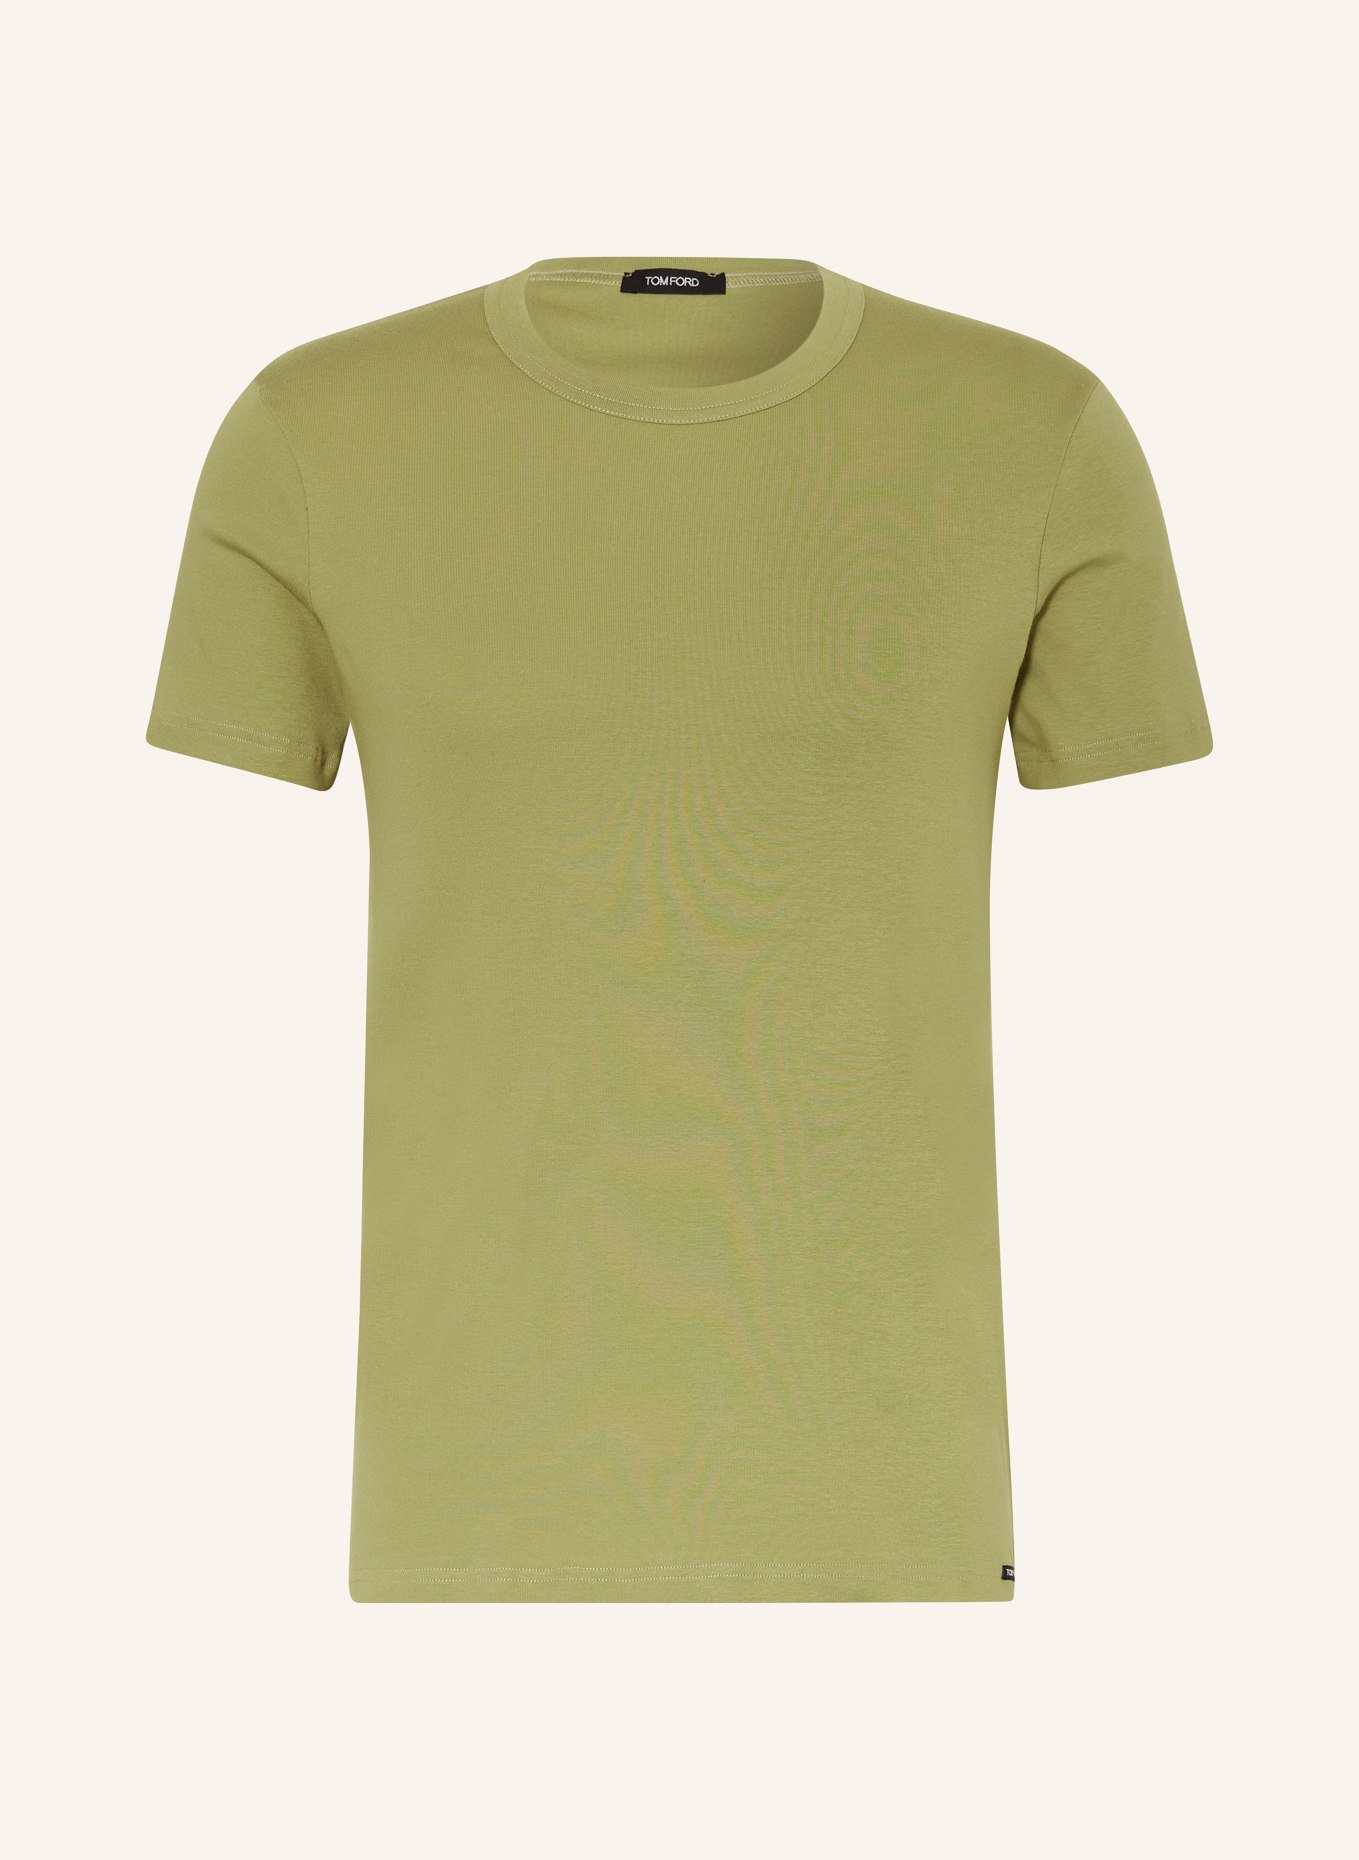 TOM FORD T-Shirt, Farbe: OLIV (Bild 1)